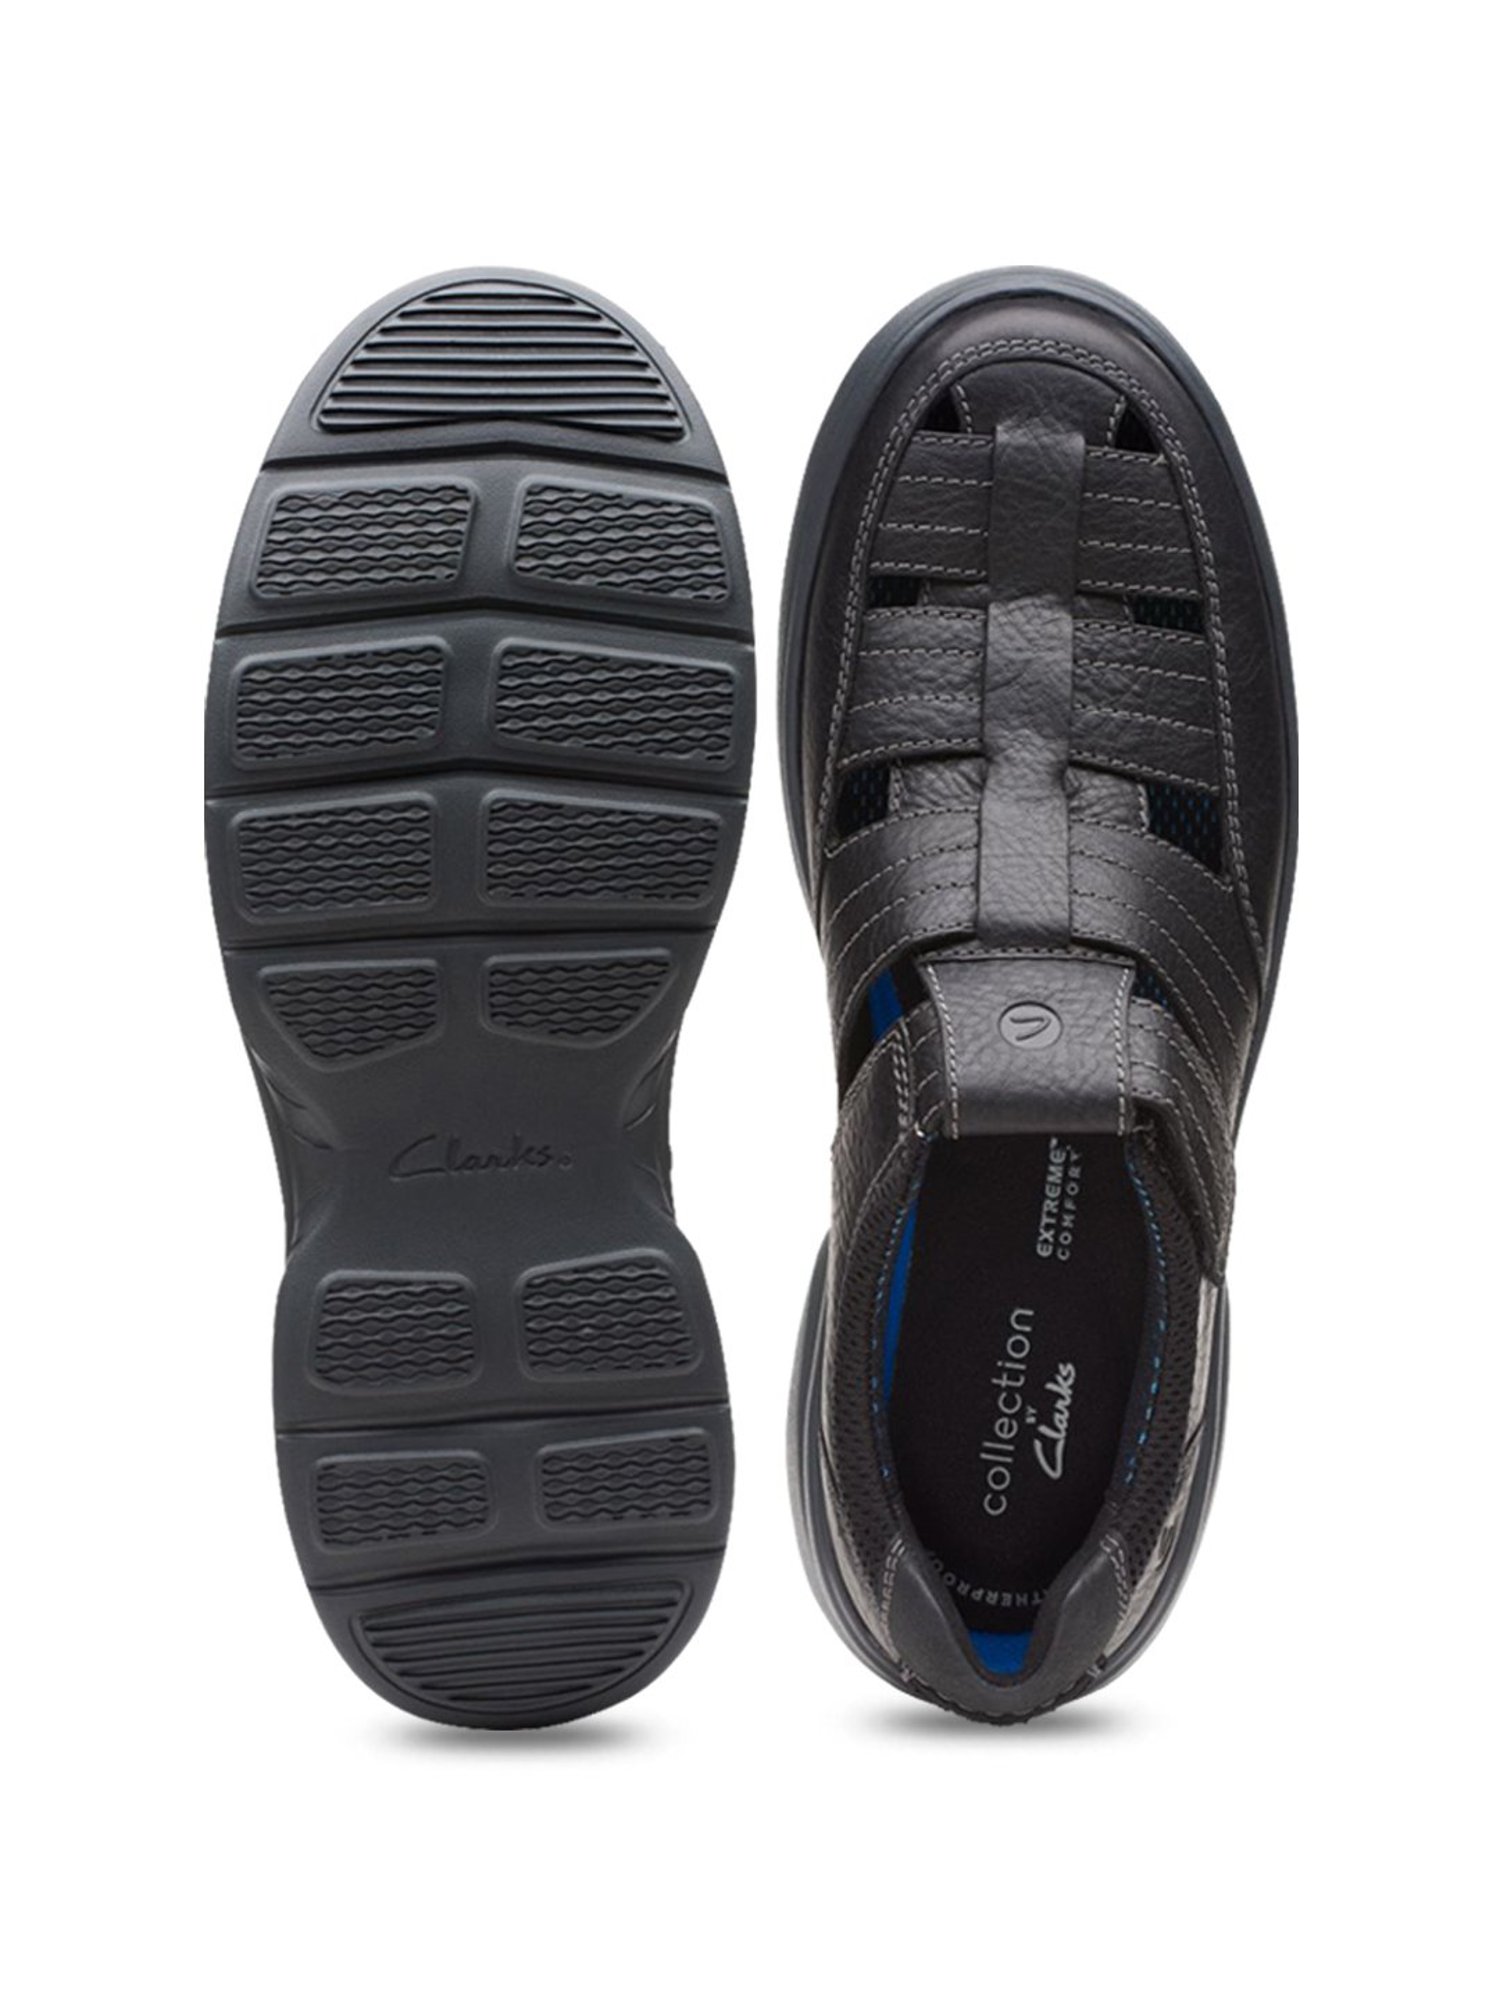 Clarks Mens Nature Trek Leather Sandals - Walmart.com